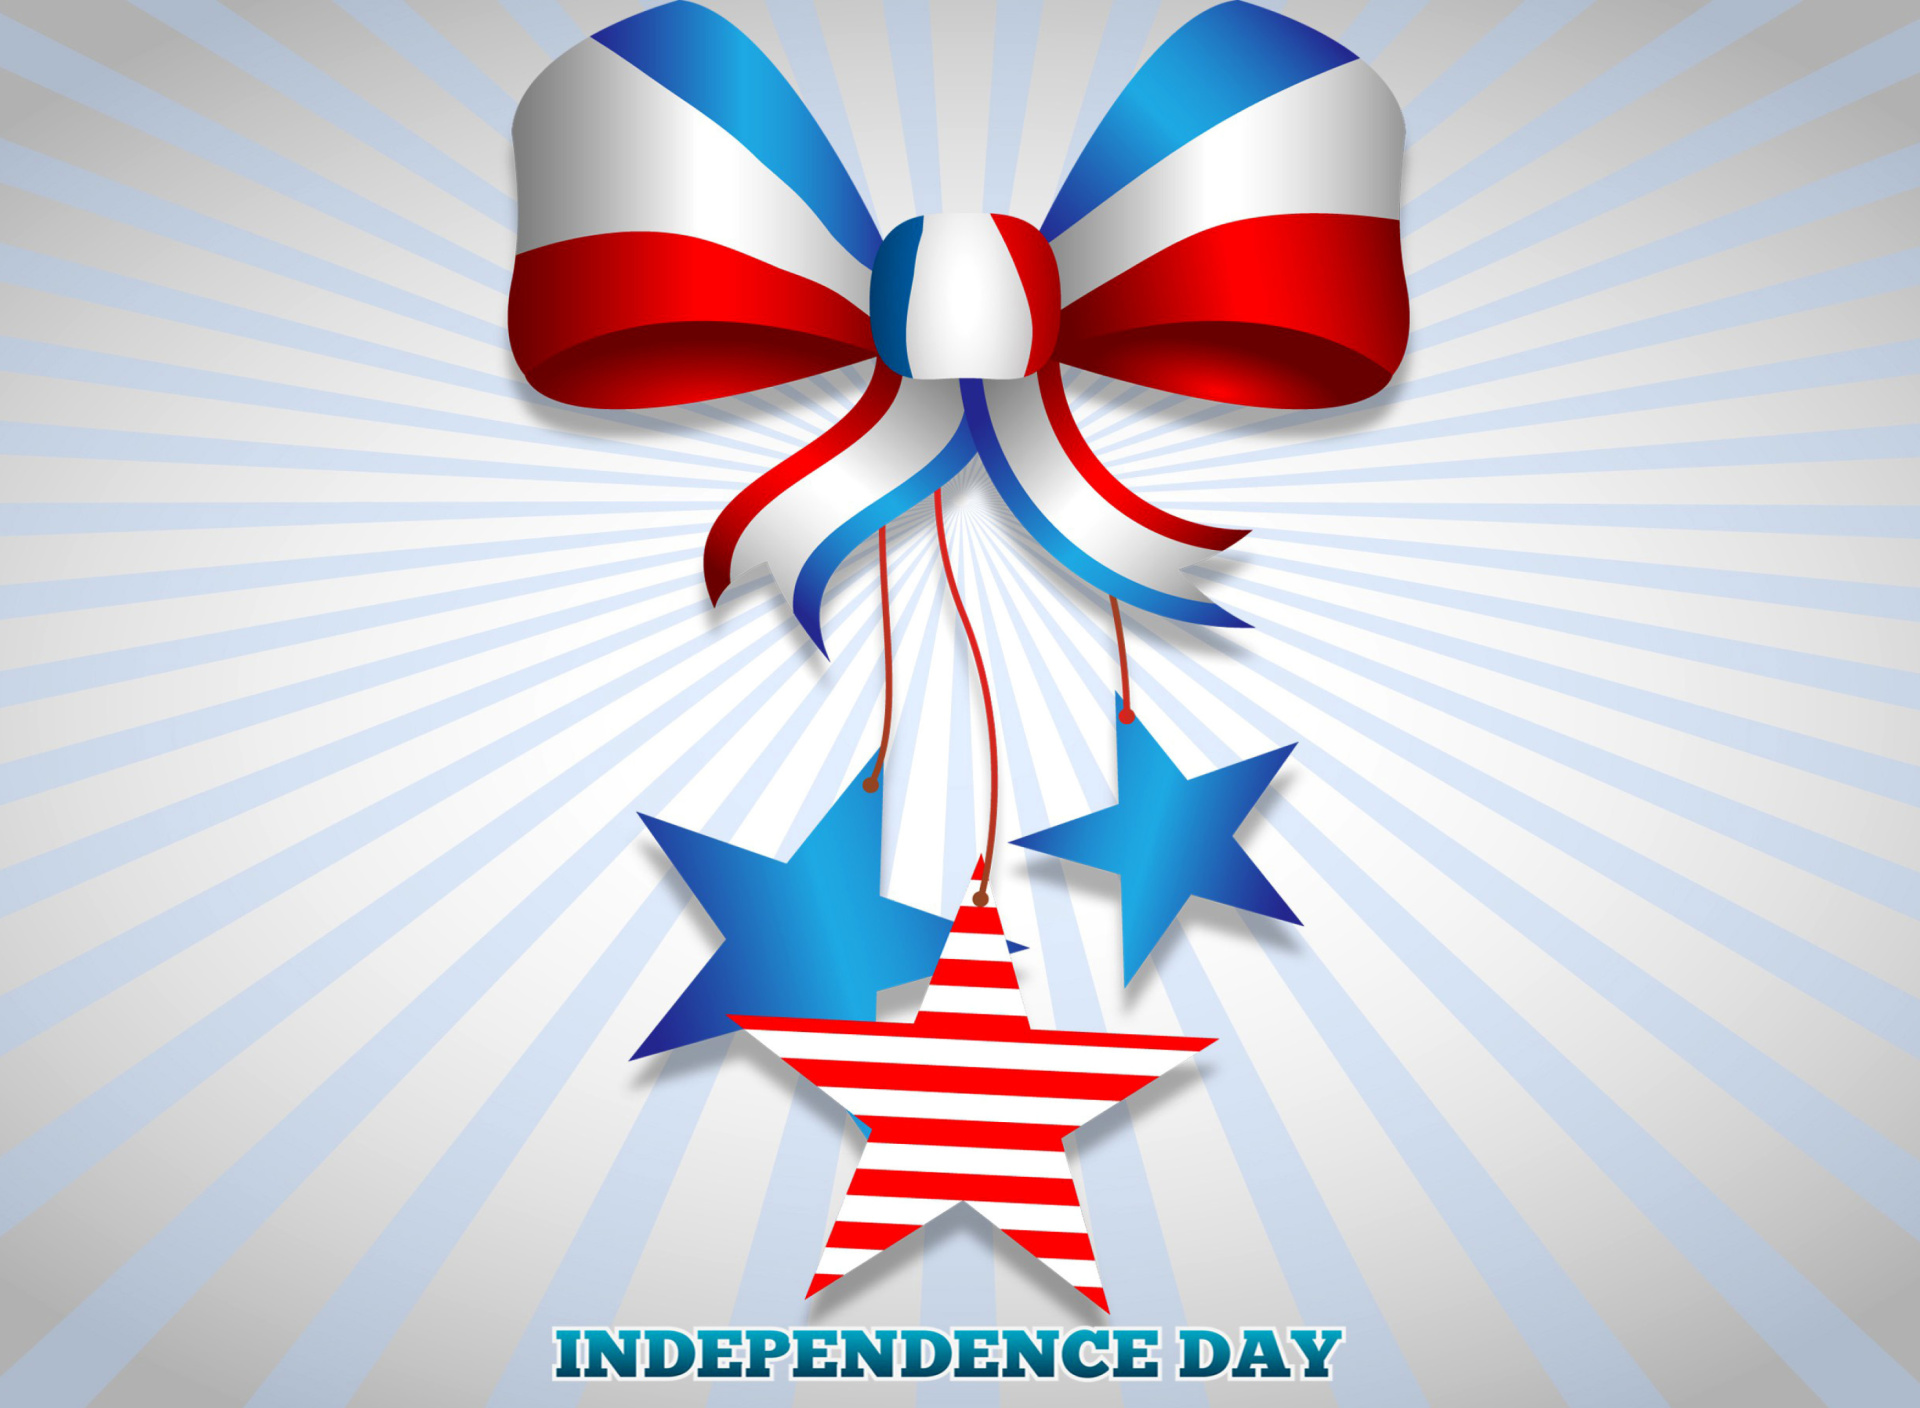 Обои United states america Idependence day 4th july 1920x1408